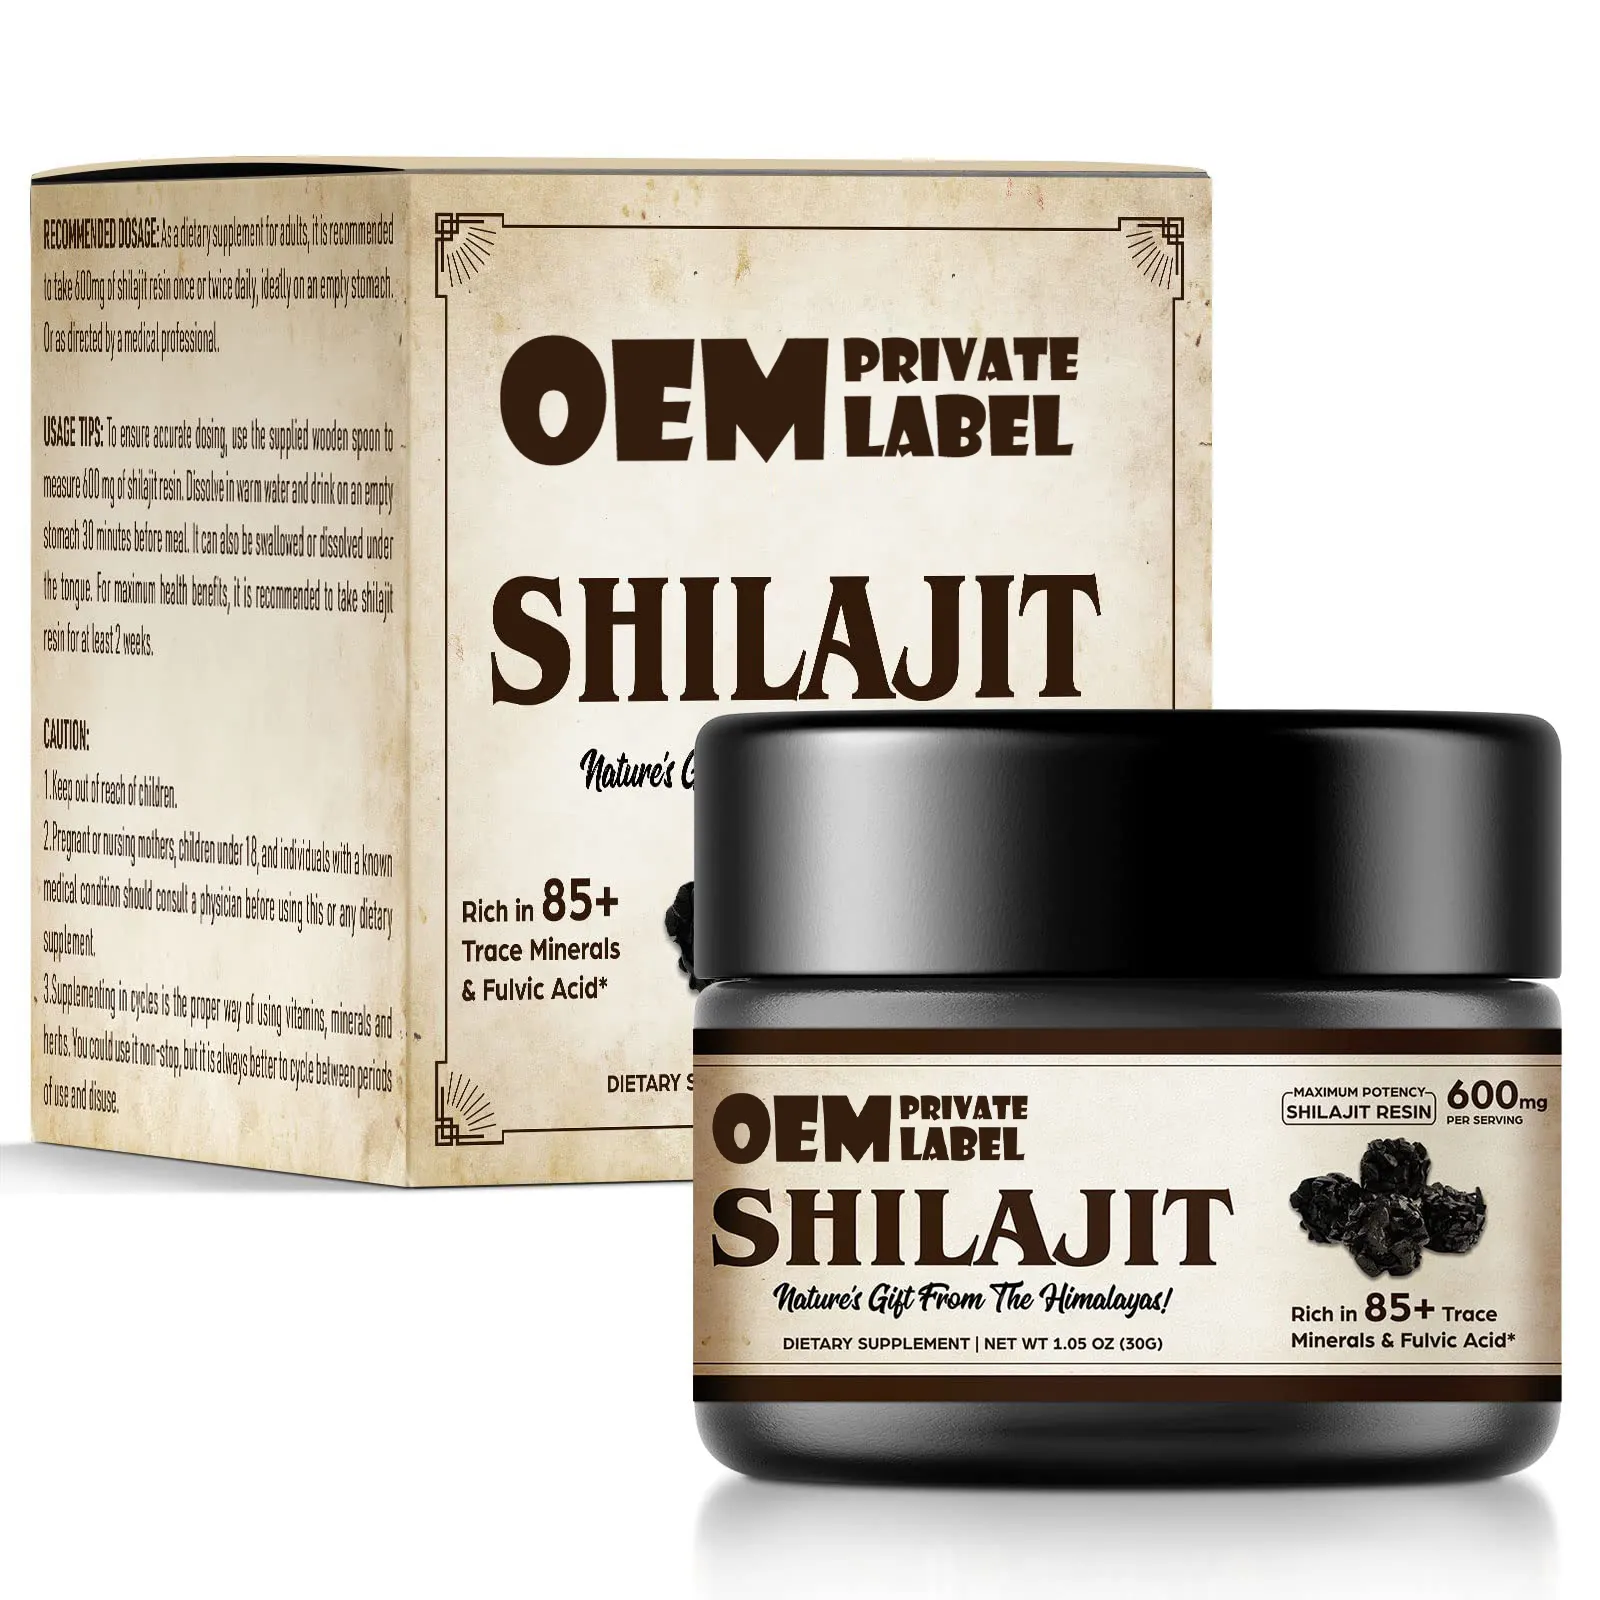 Vente en gros d'extrait de Shilajit naturel 100% pur Shilajit liquide de l'Himalaya